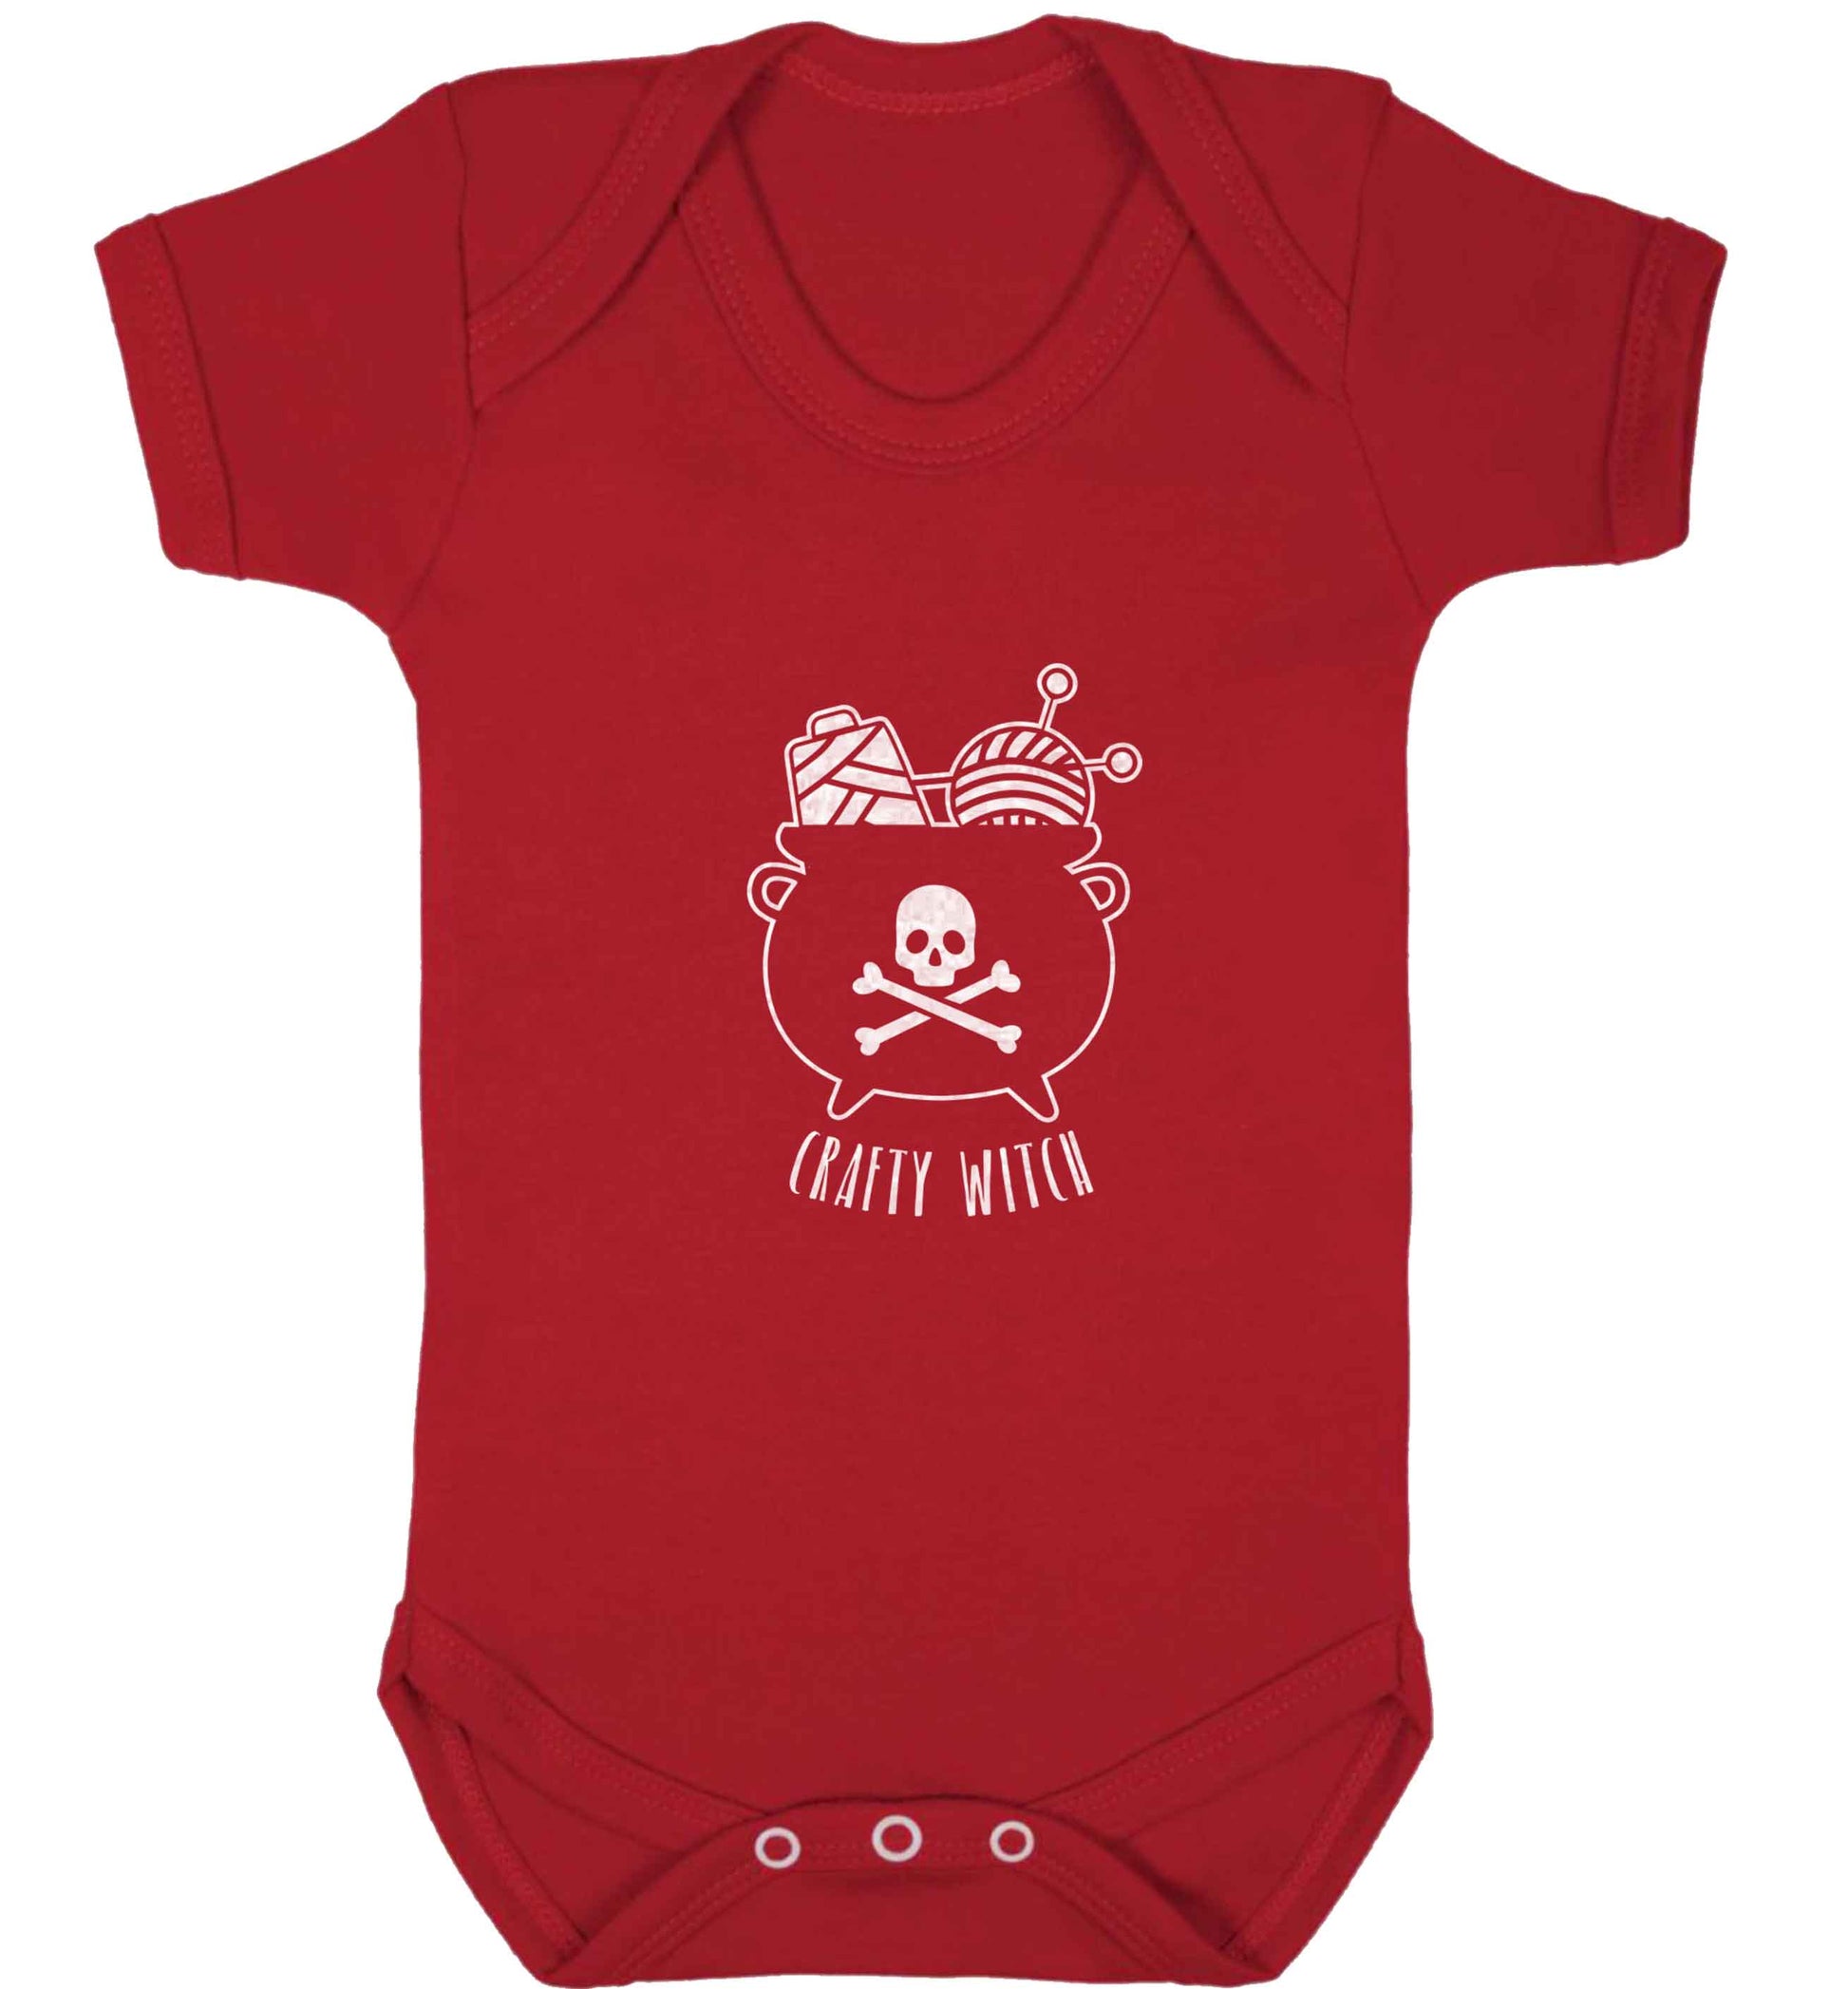 Crafty witch baby vest red 18-24 months